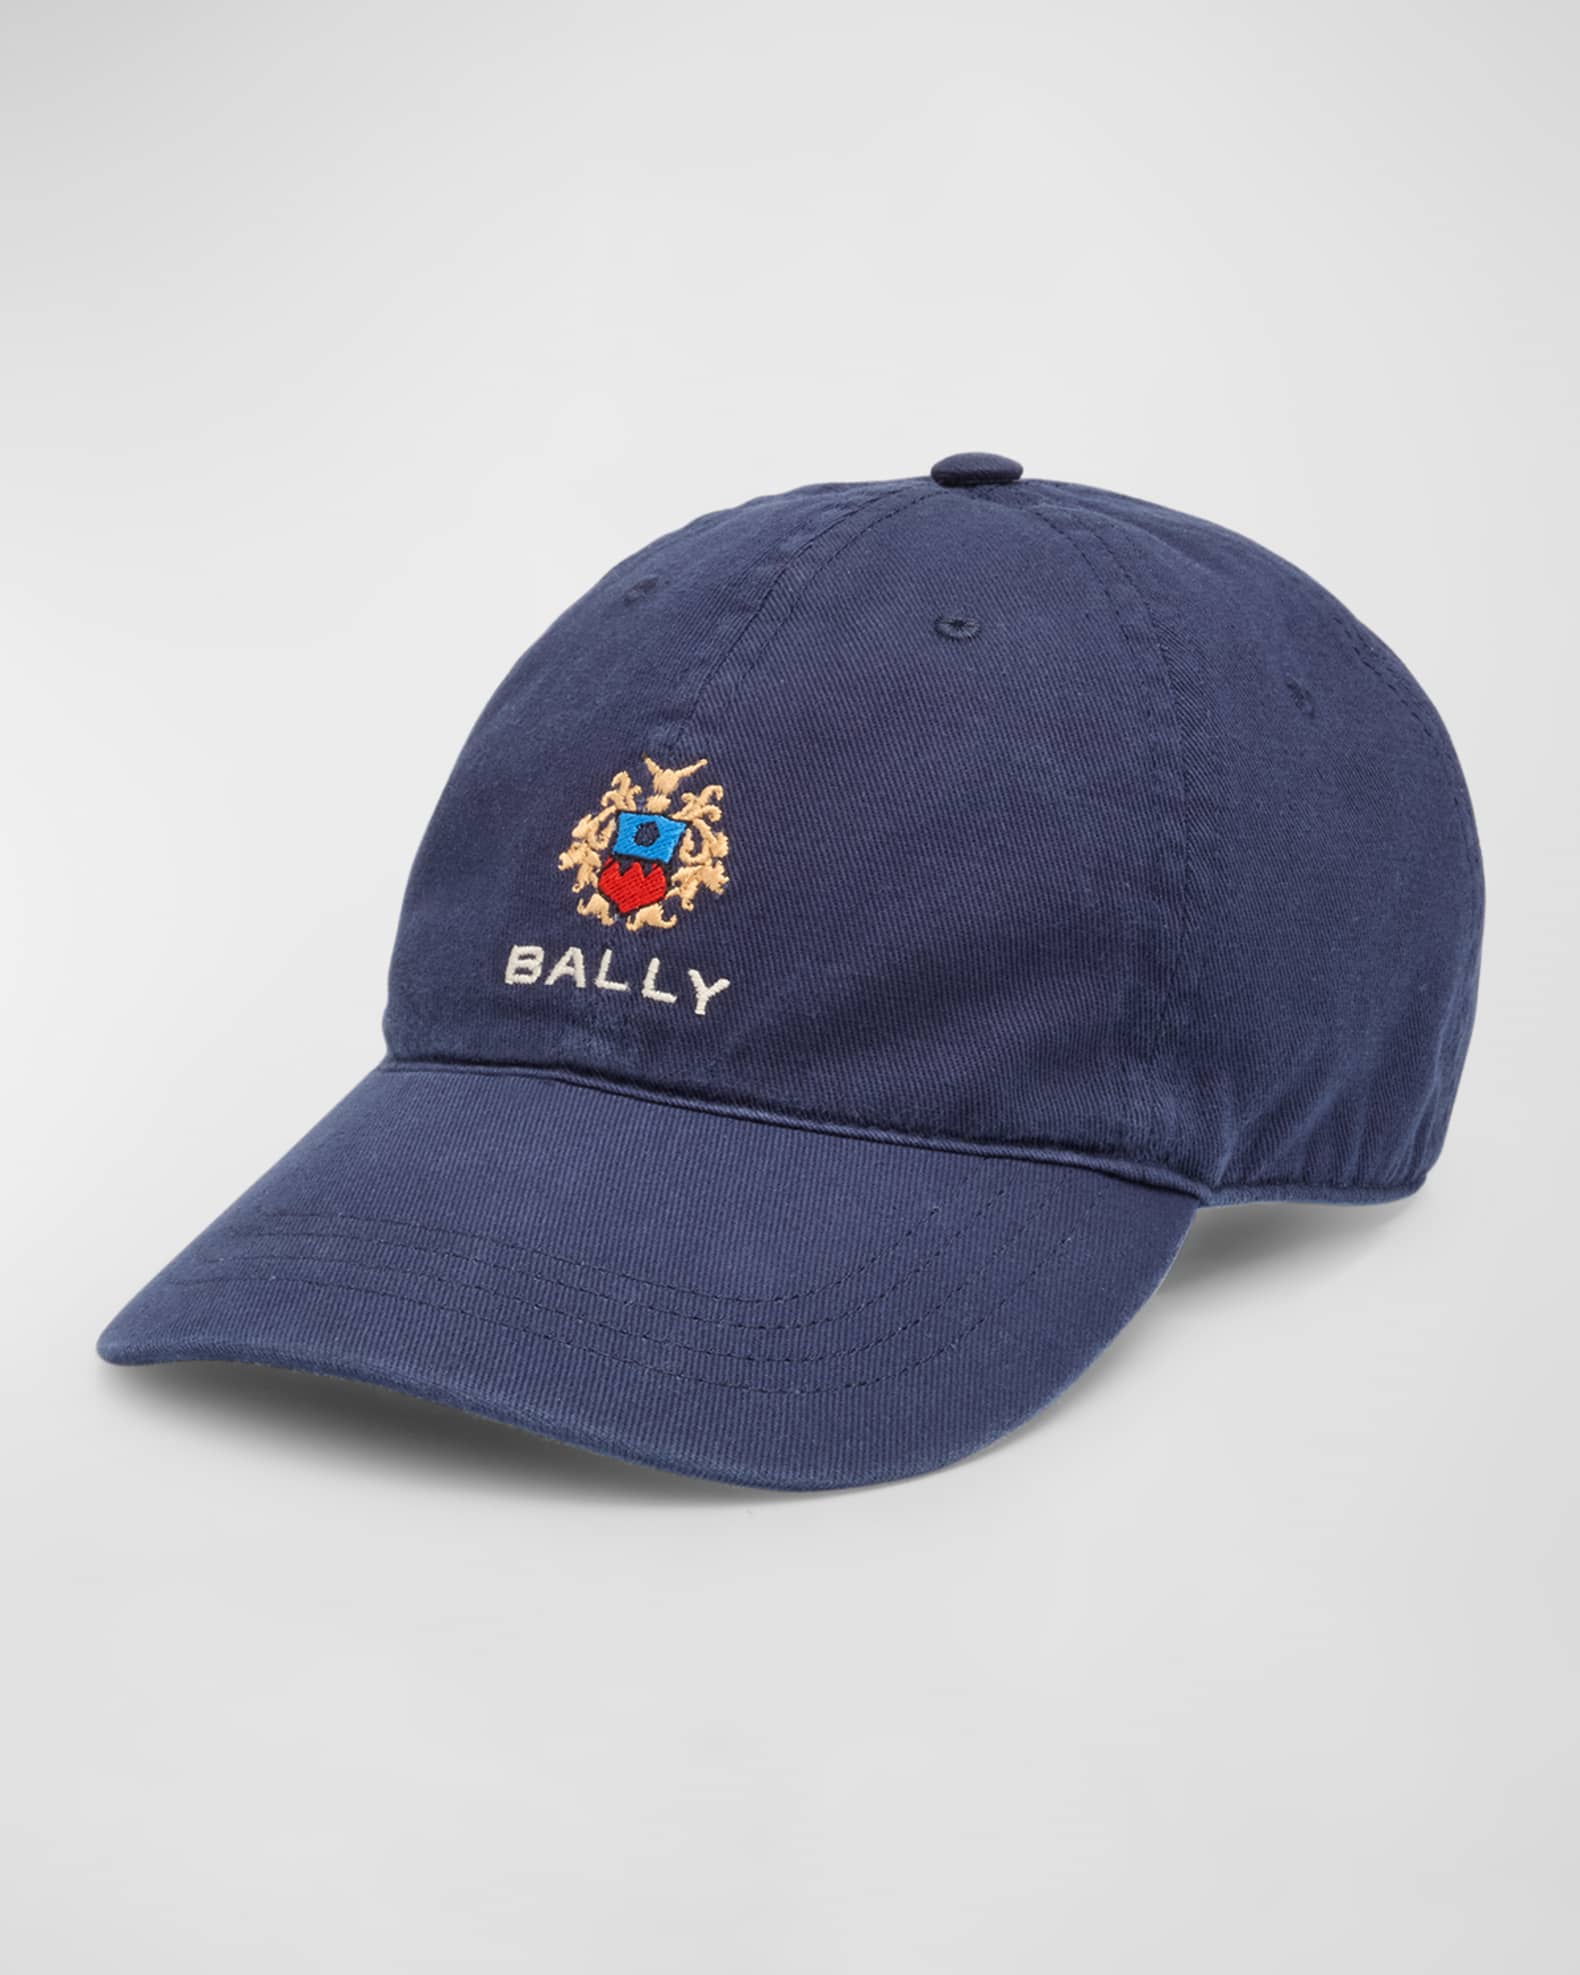 Bally baseball hat